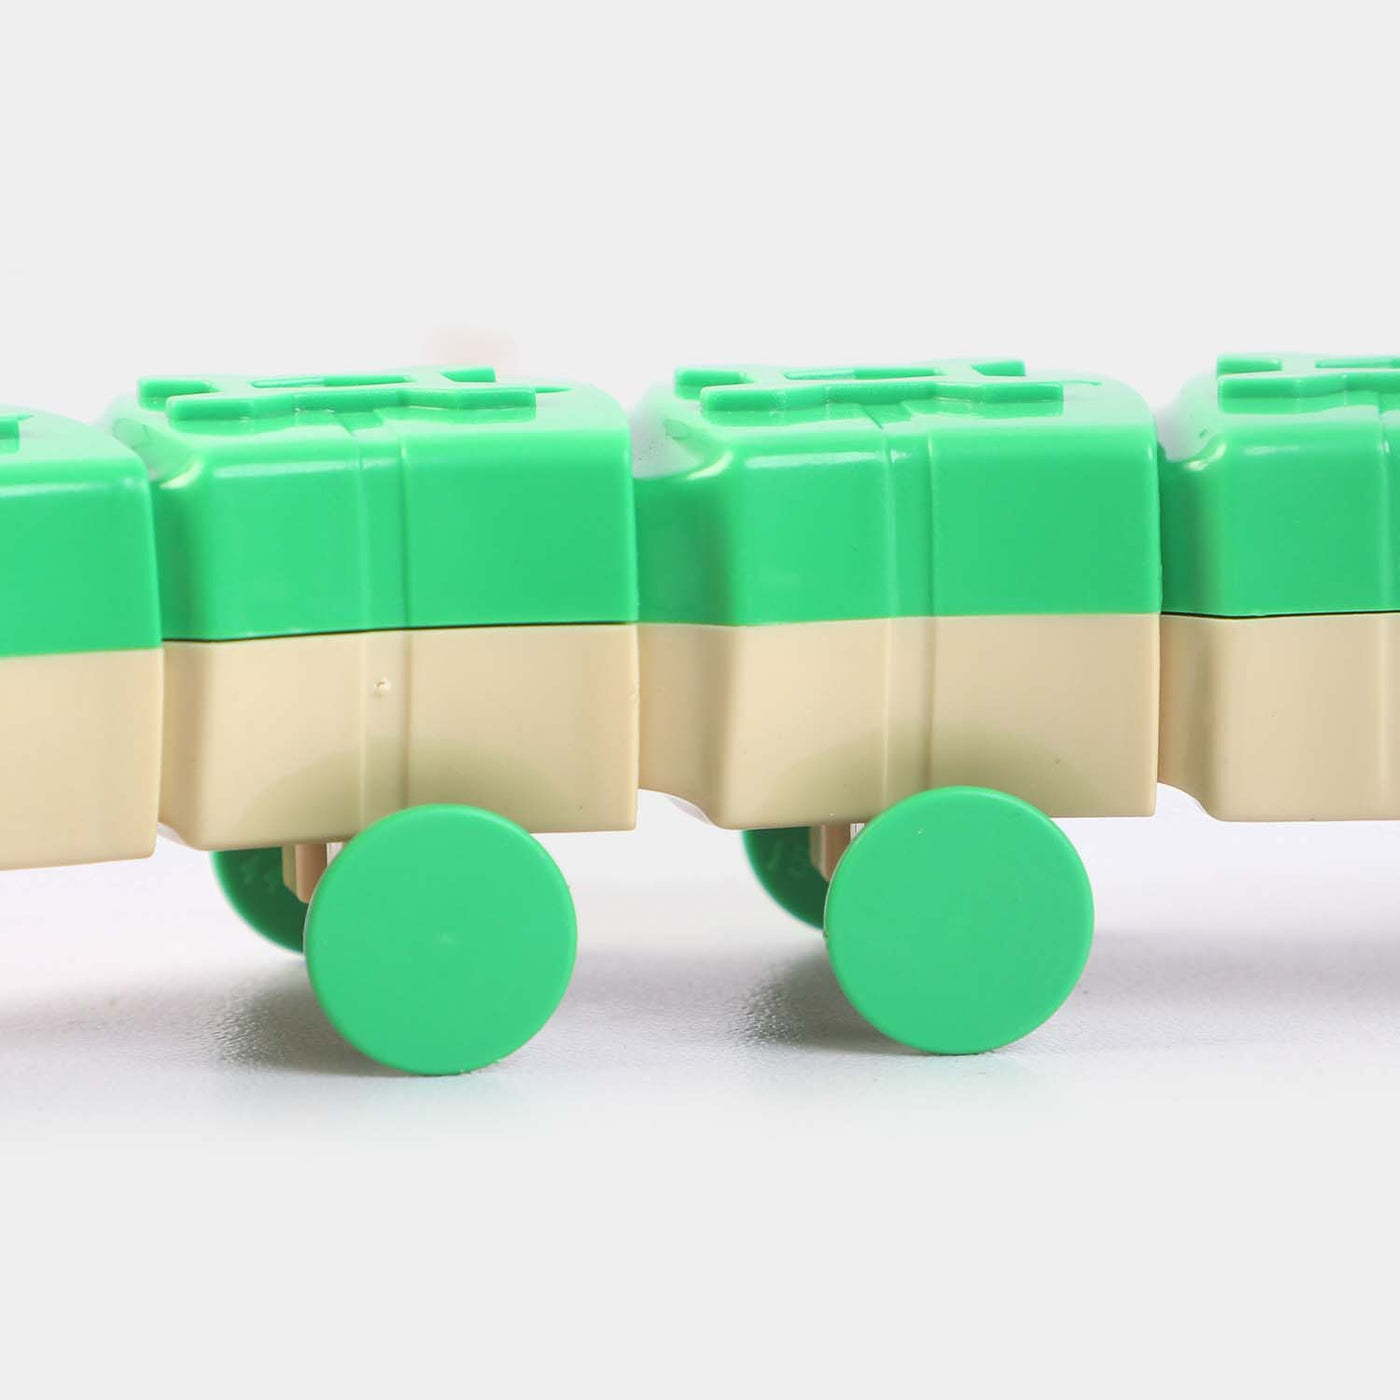 Crocodile Walking Toy For Kids